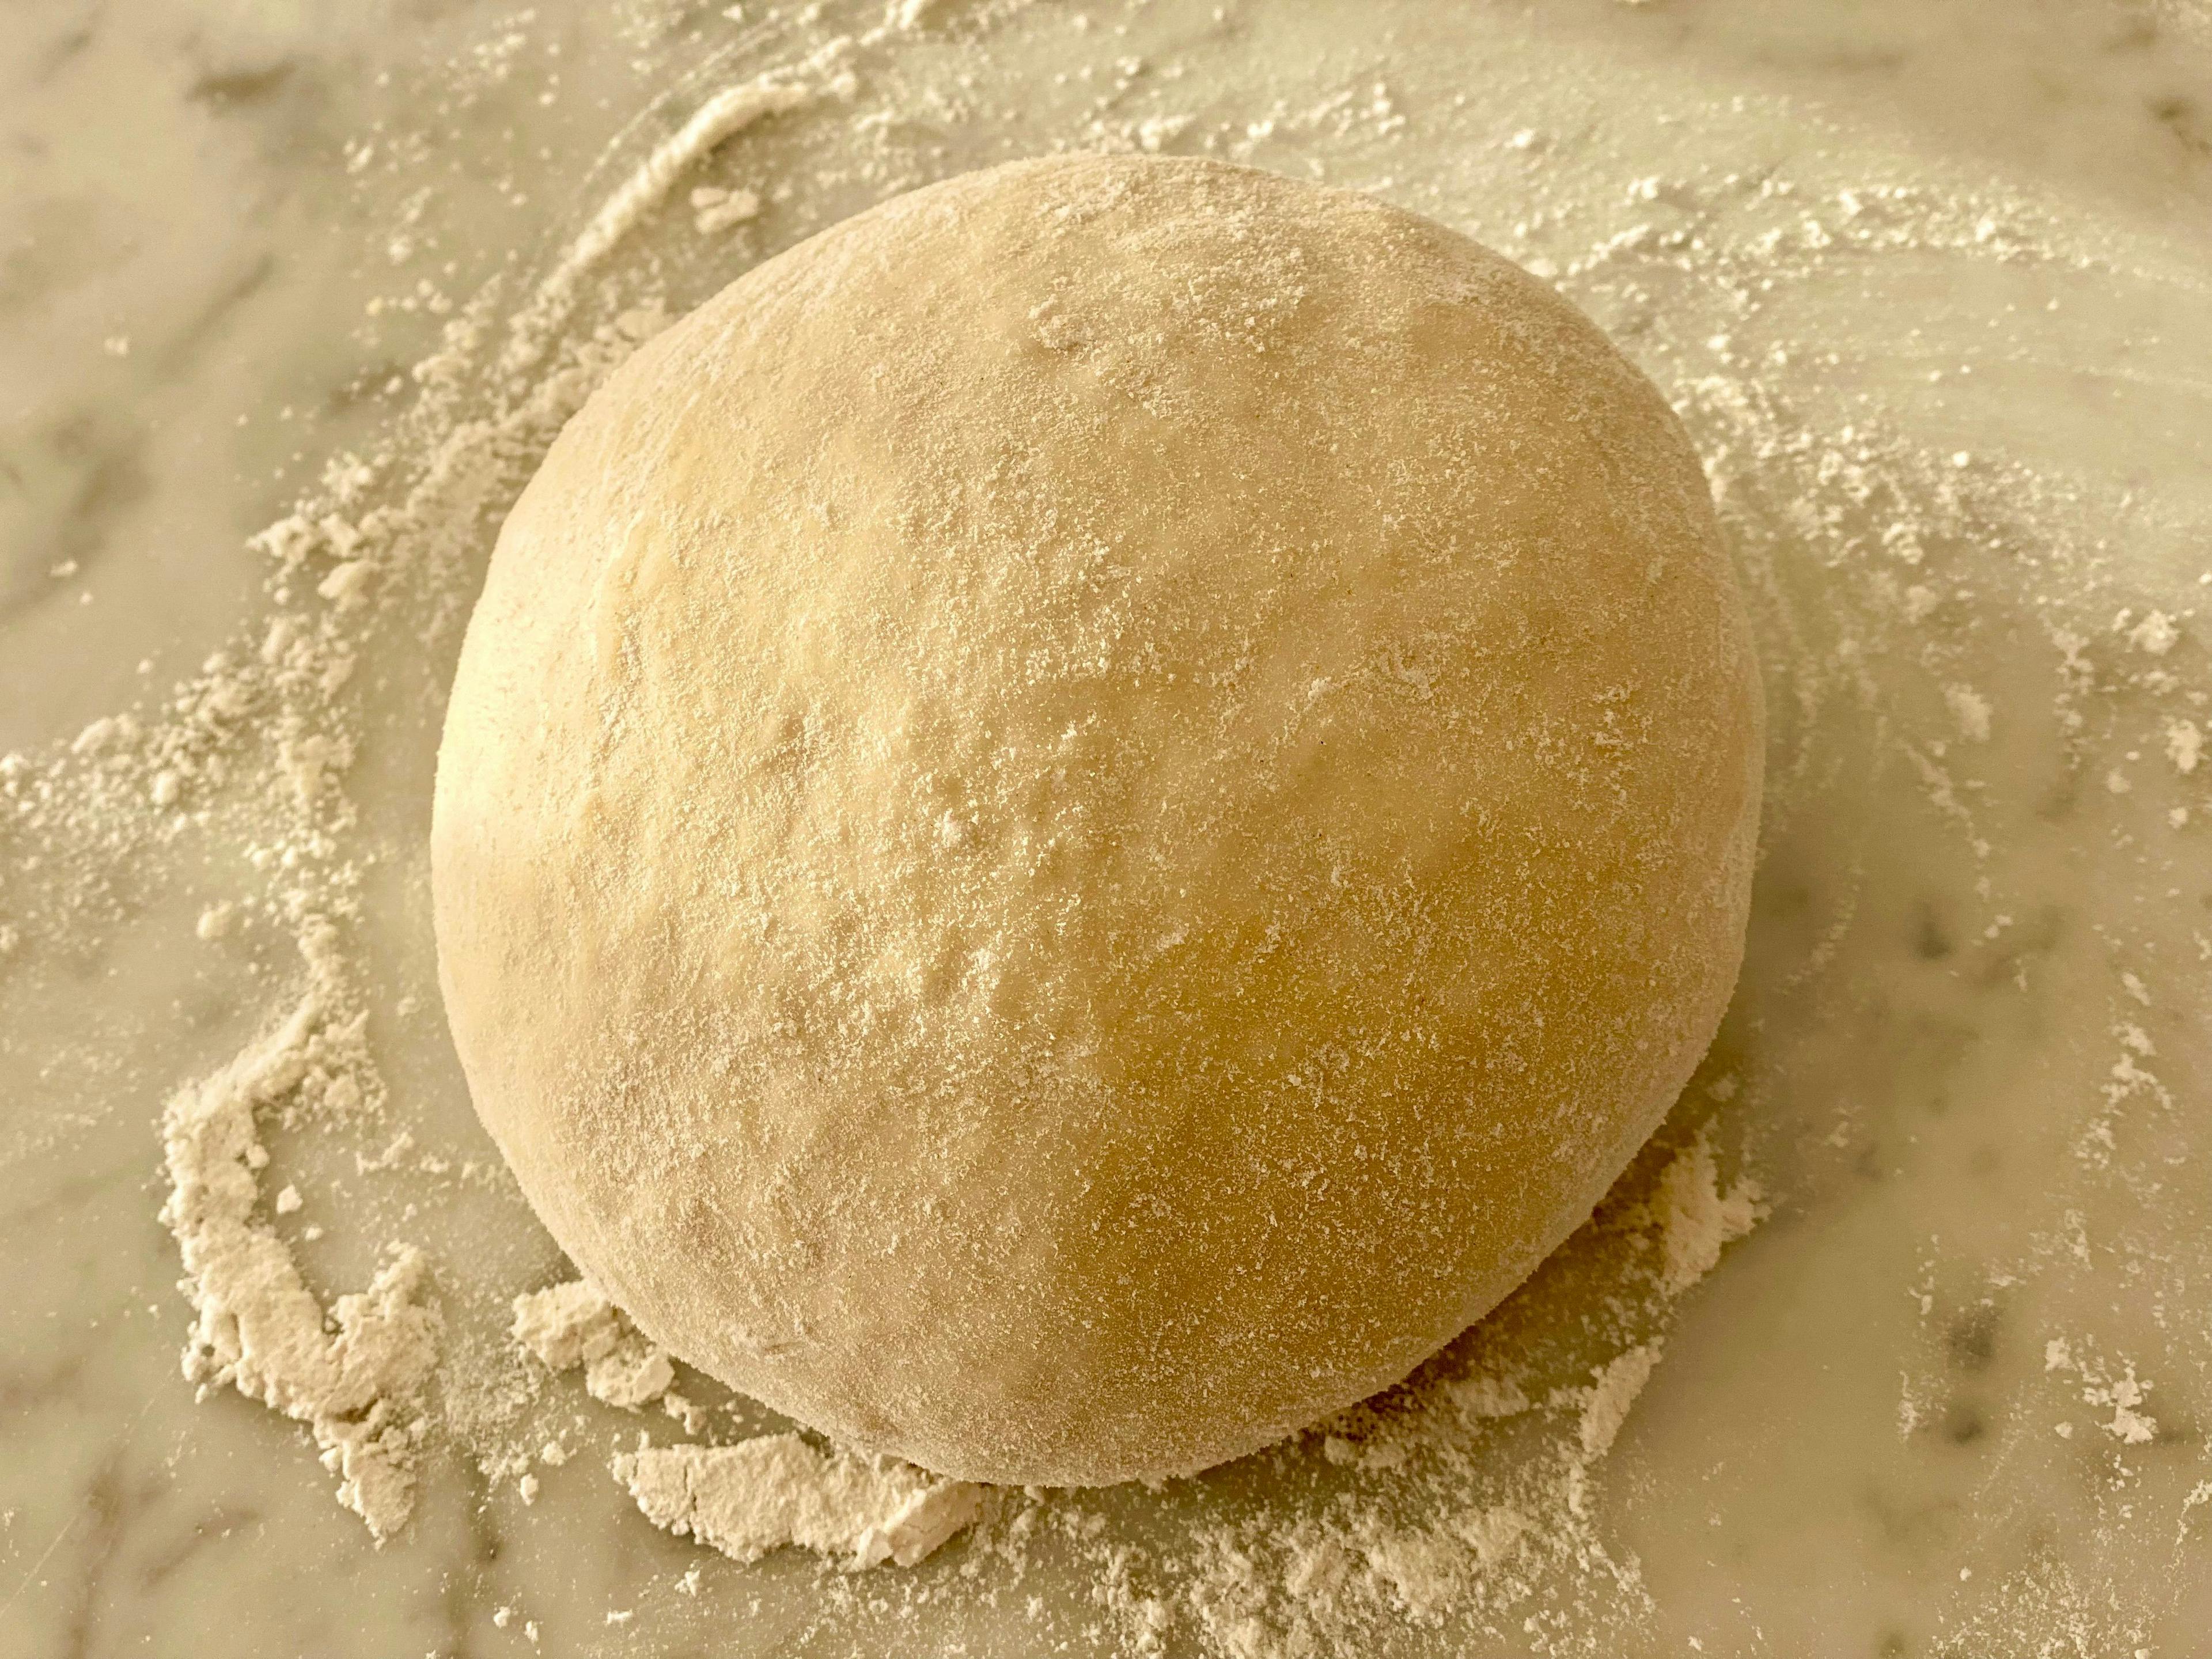 round, shiny dough ball